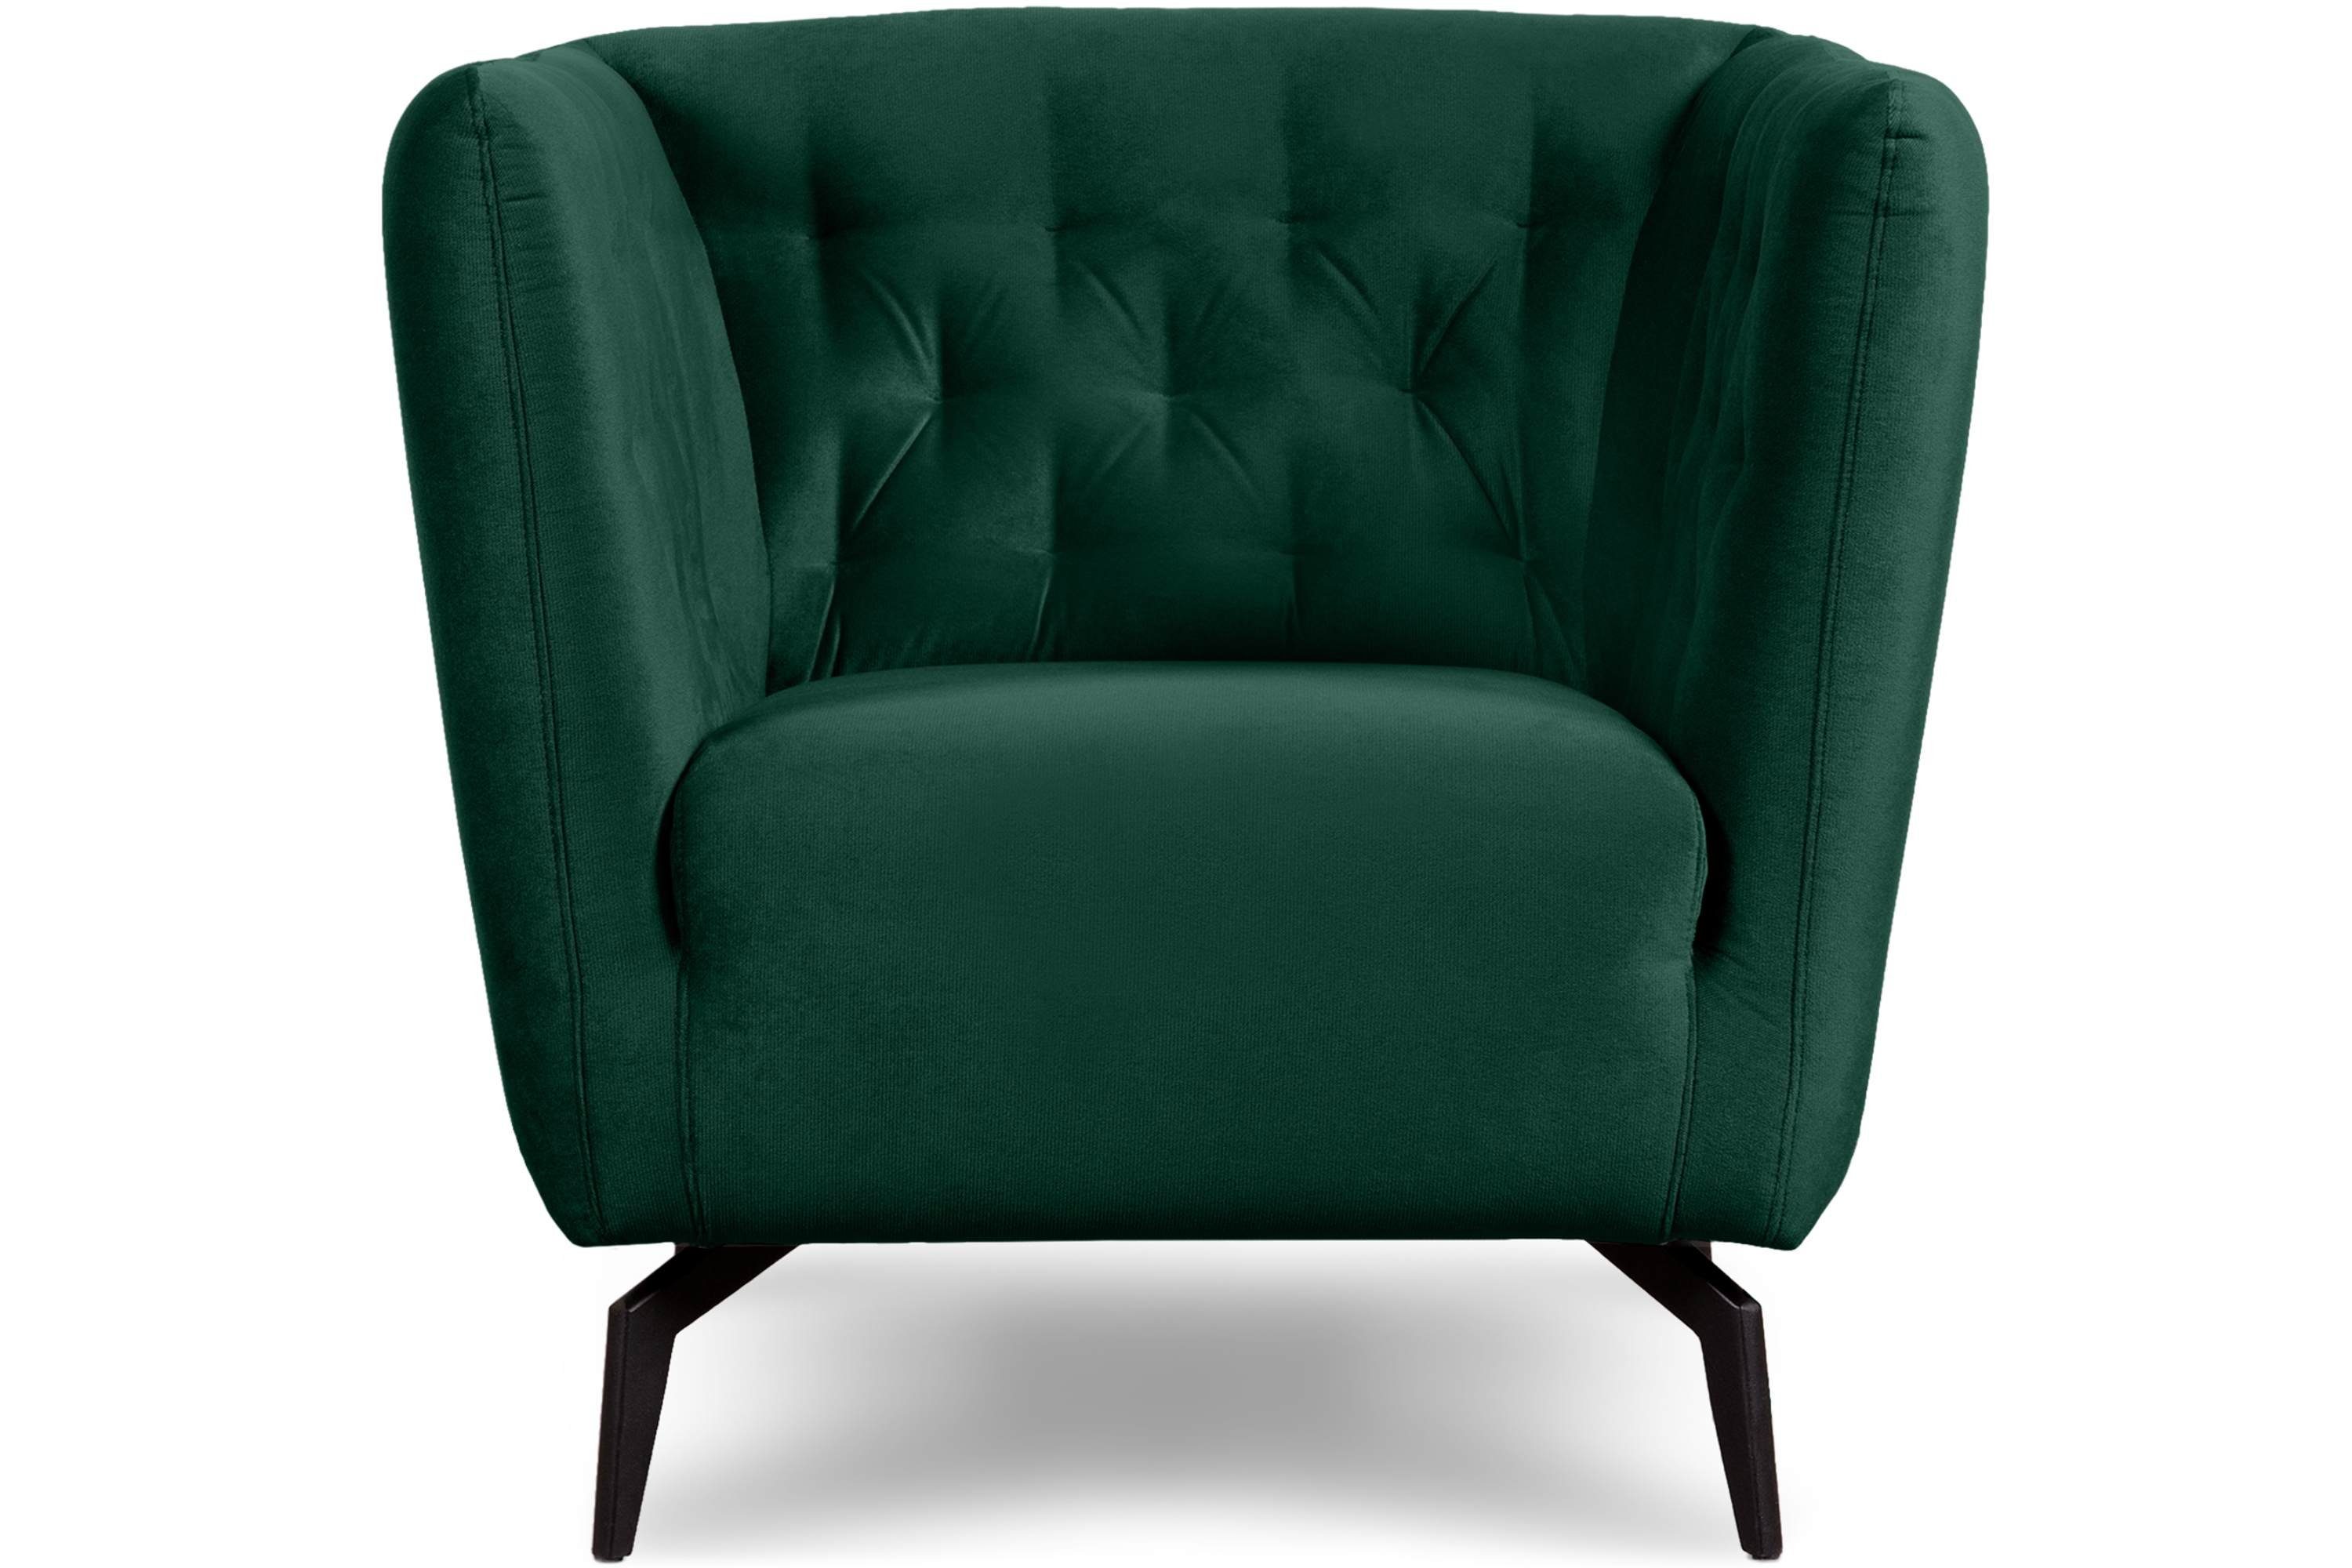 Konsimo Sessel CORDI Gesteppter Sessel, auf hohen Metallfüßen, Schaumstoff und gewellte Feder im Sitz dunkelgrün | dunkelgrün